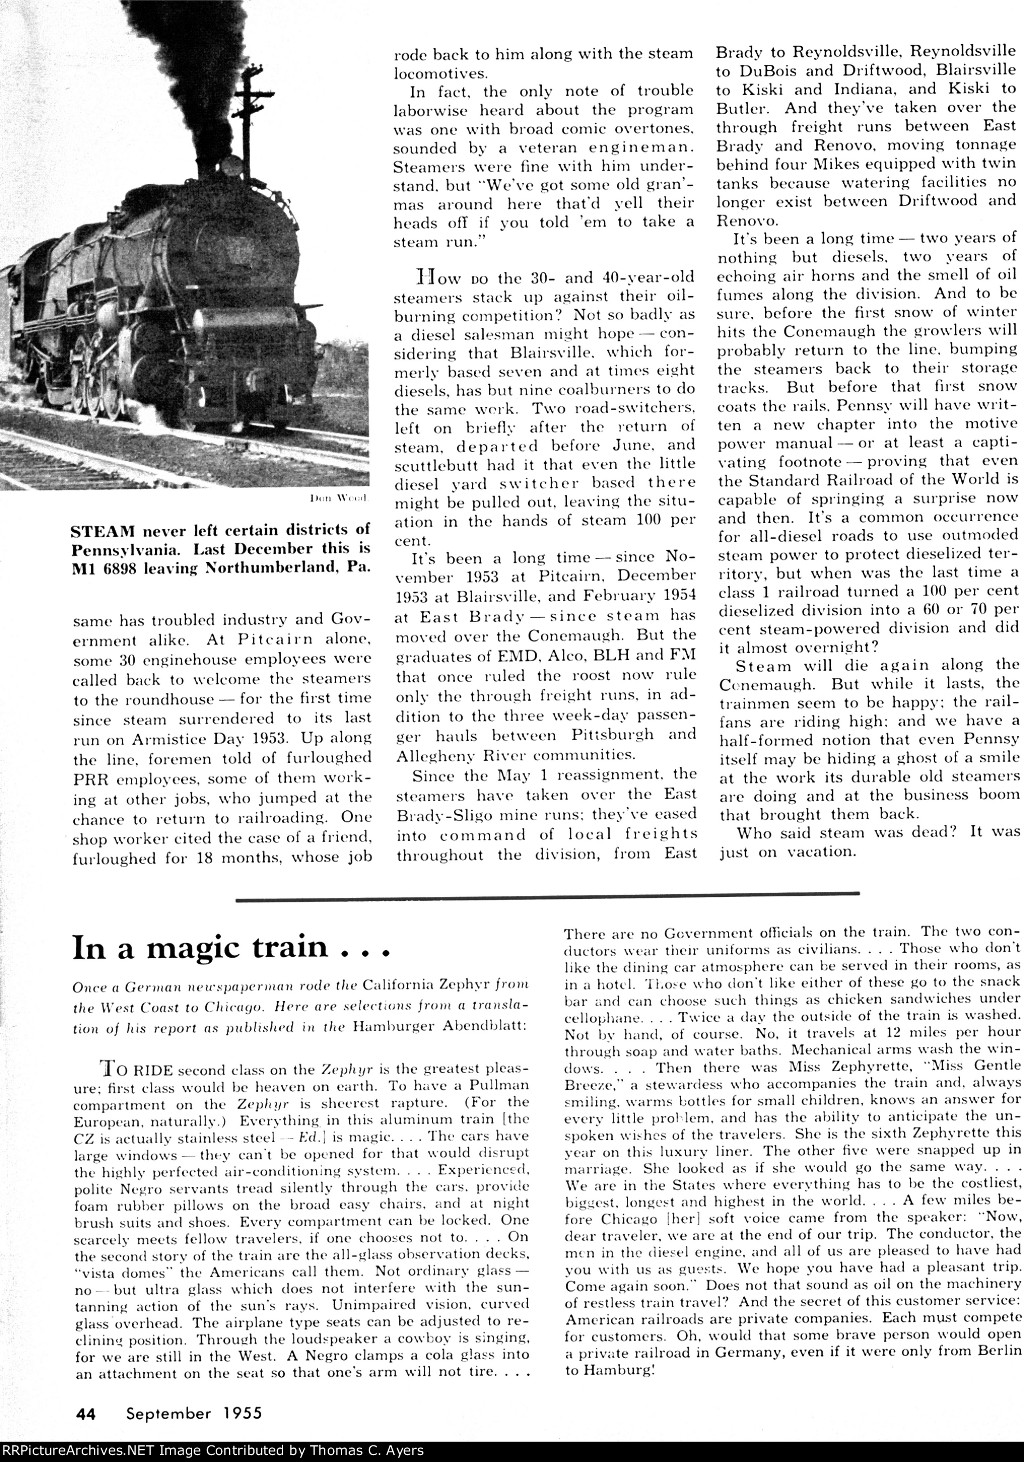 "De-dieselization," Page 44, 1955